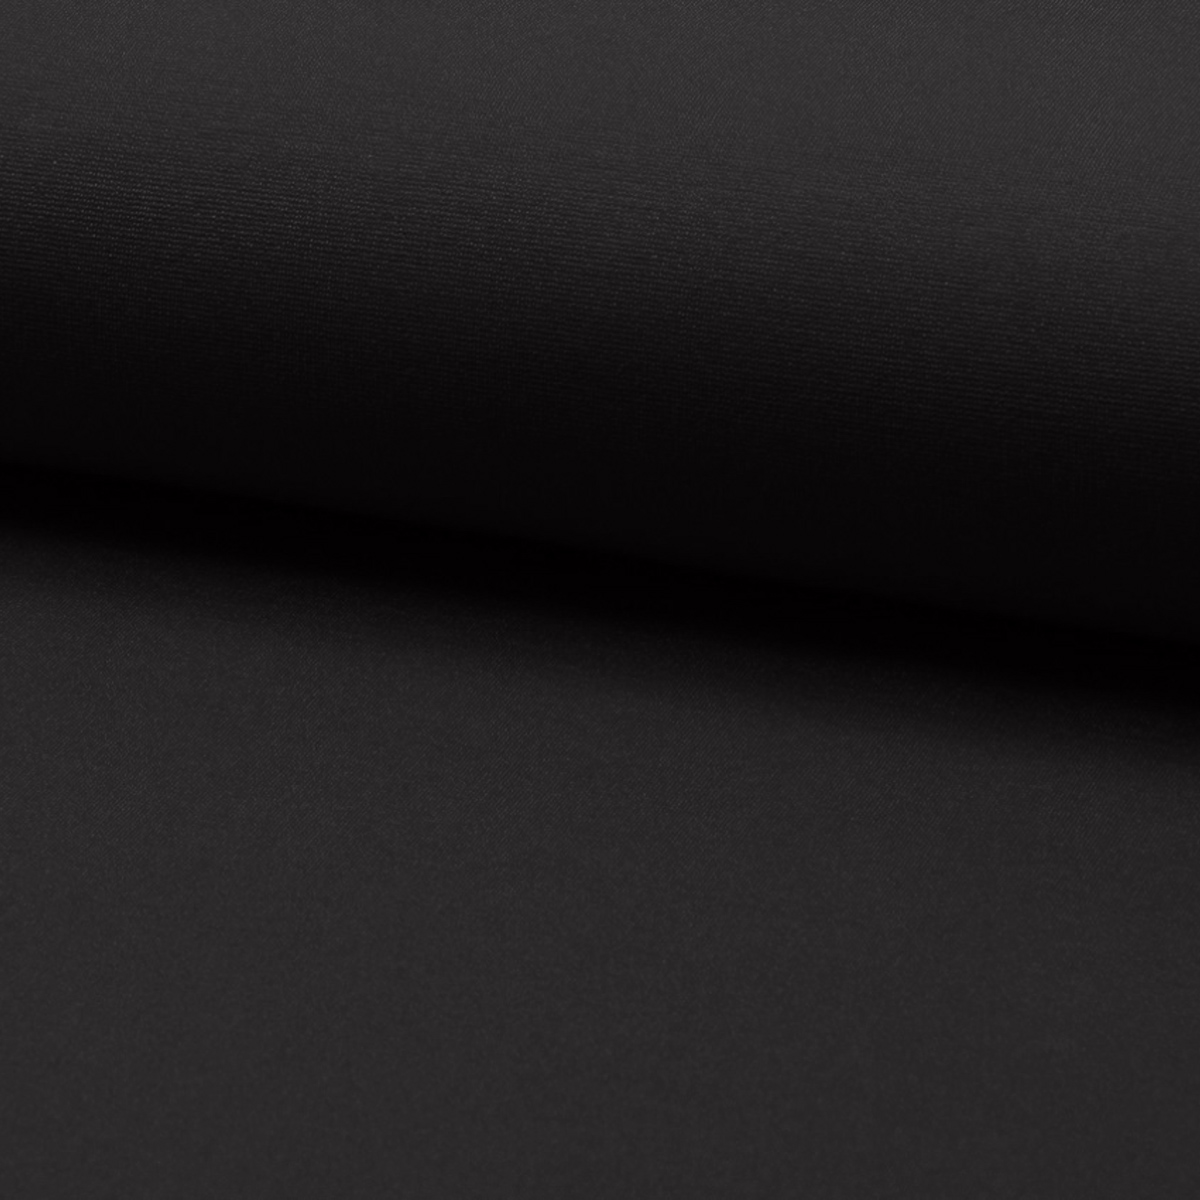 Romanitjersey schwarzbraun, 60%Viscose, 35%Nylon, 5%Elasthan/Spandex, 150cm breit